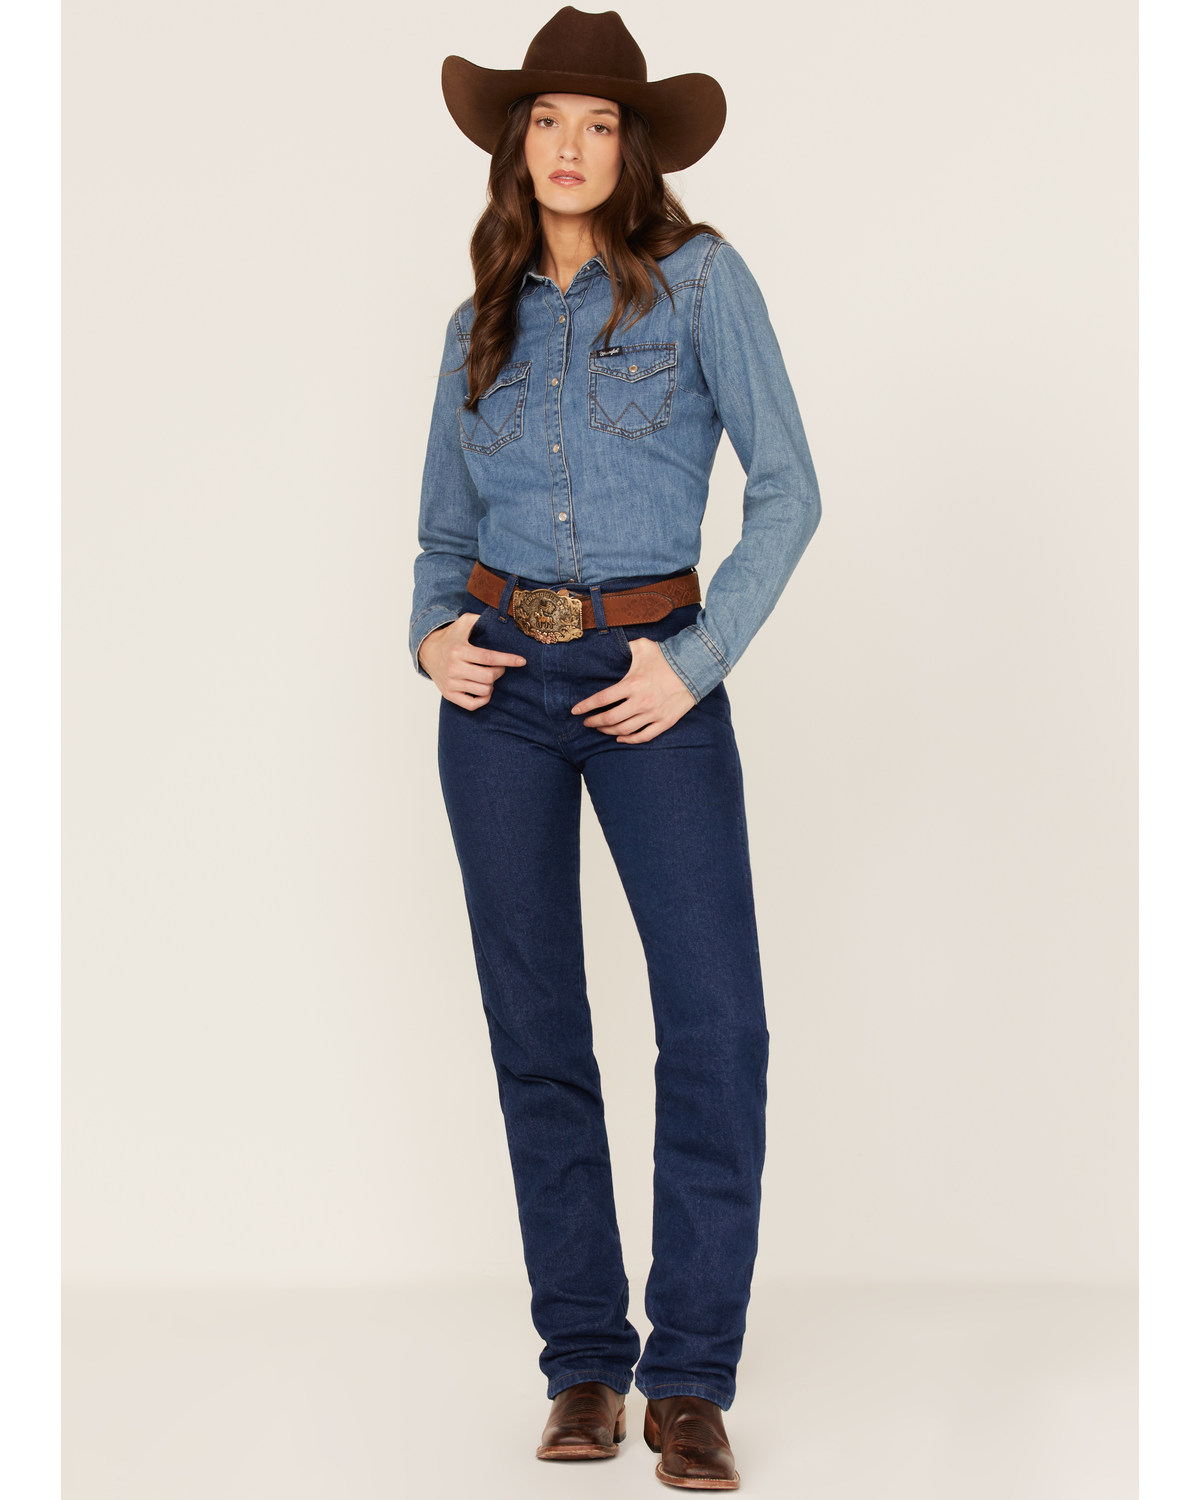 expensive wrangler jeans